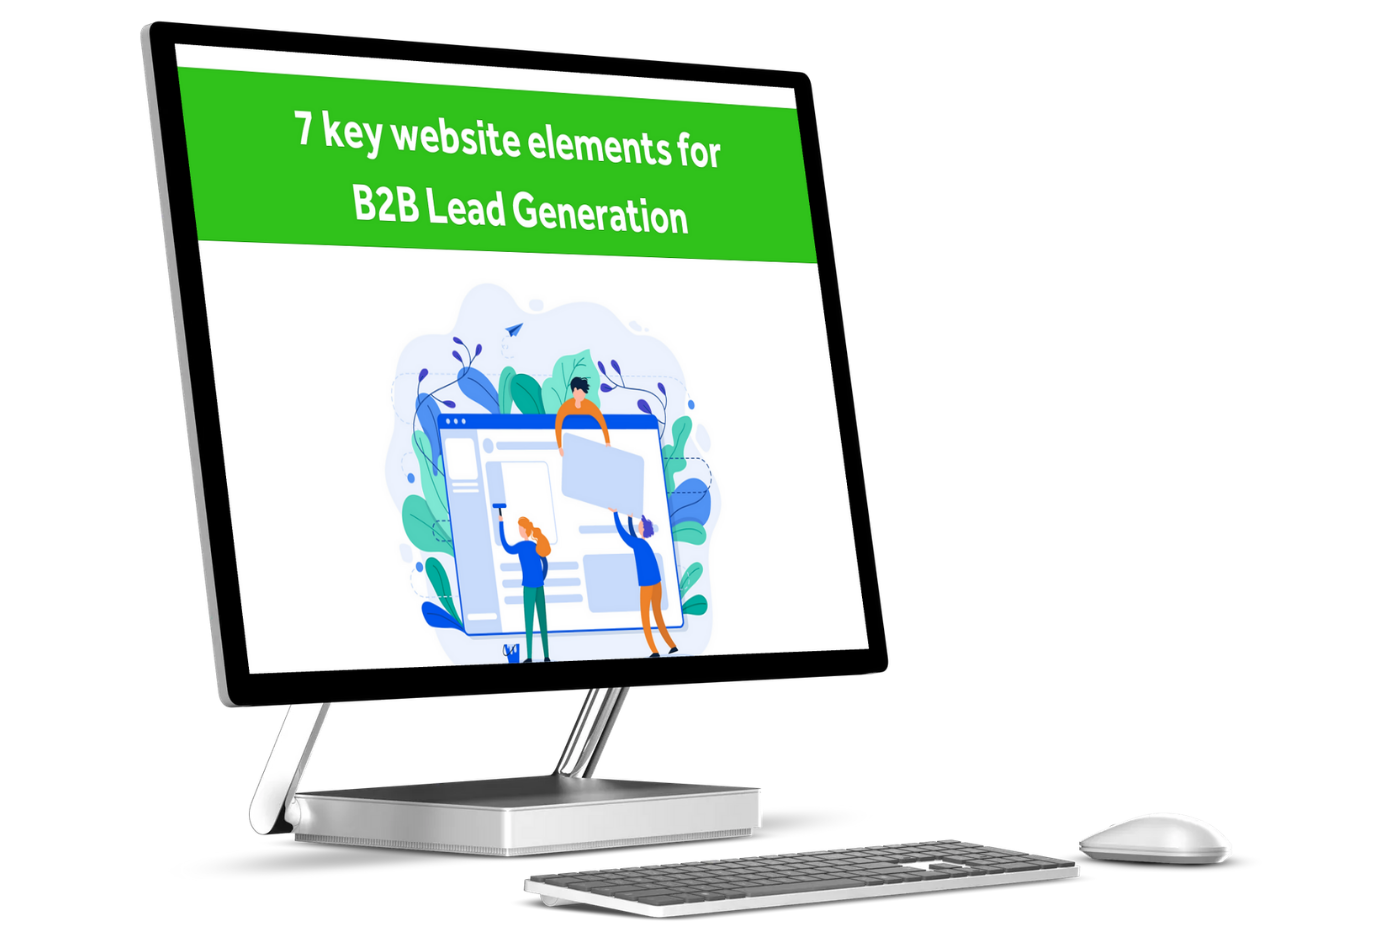 7 key website elements for B2B Lead Generation